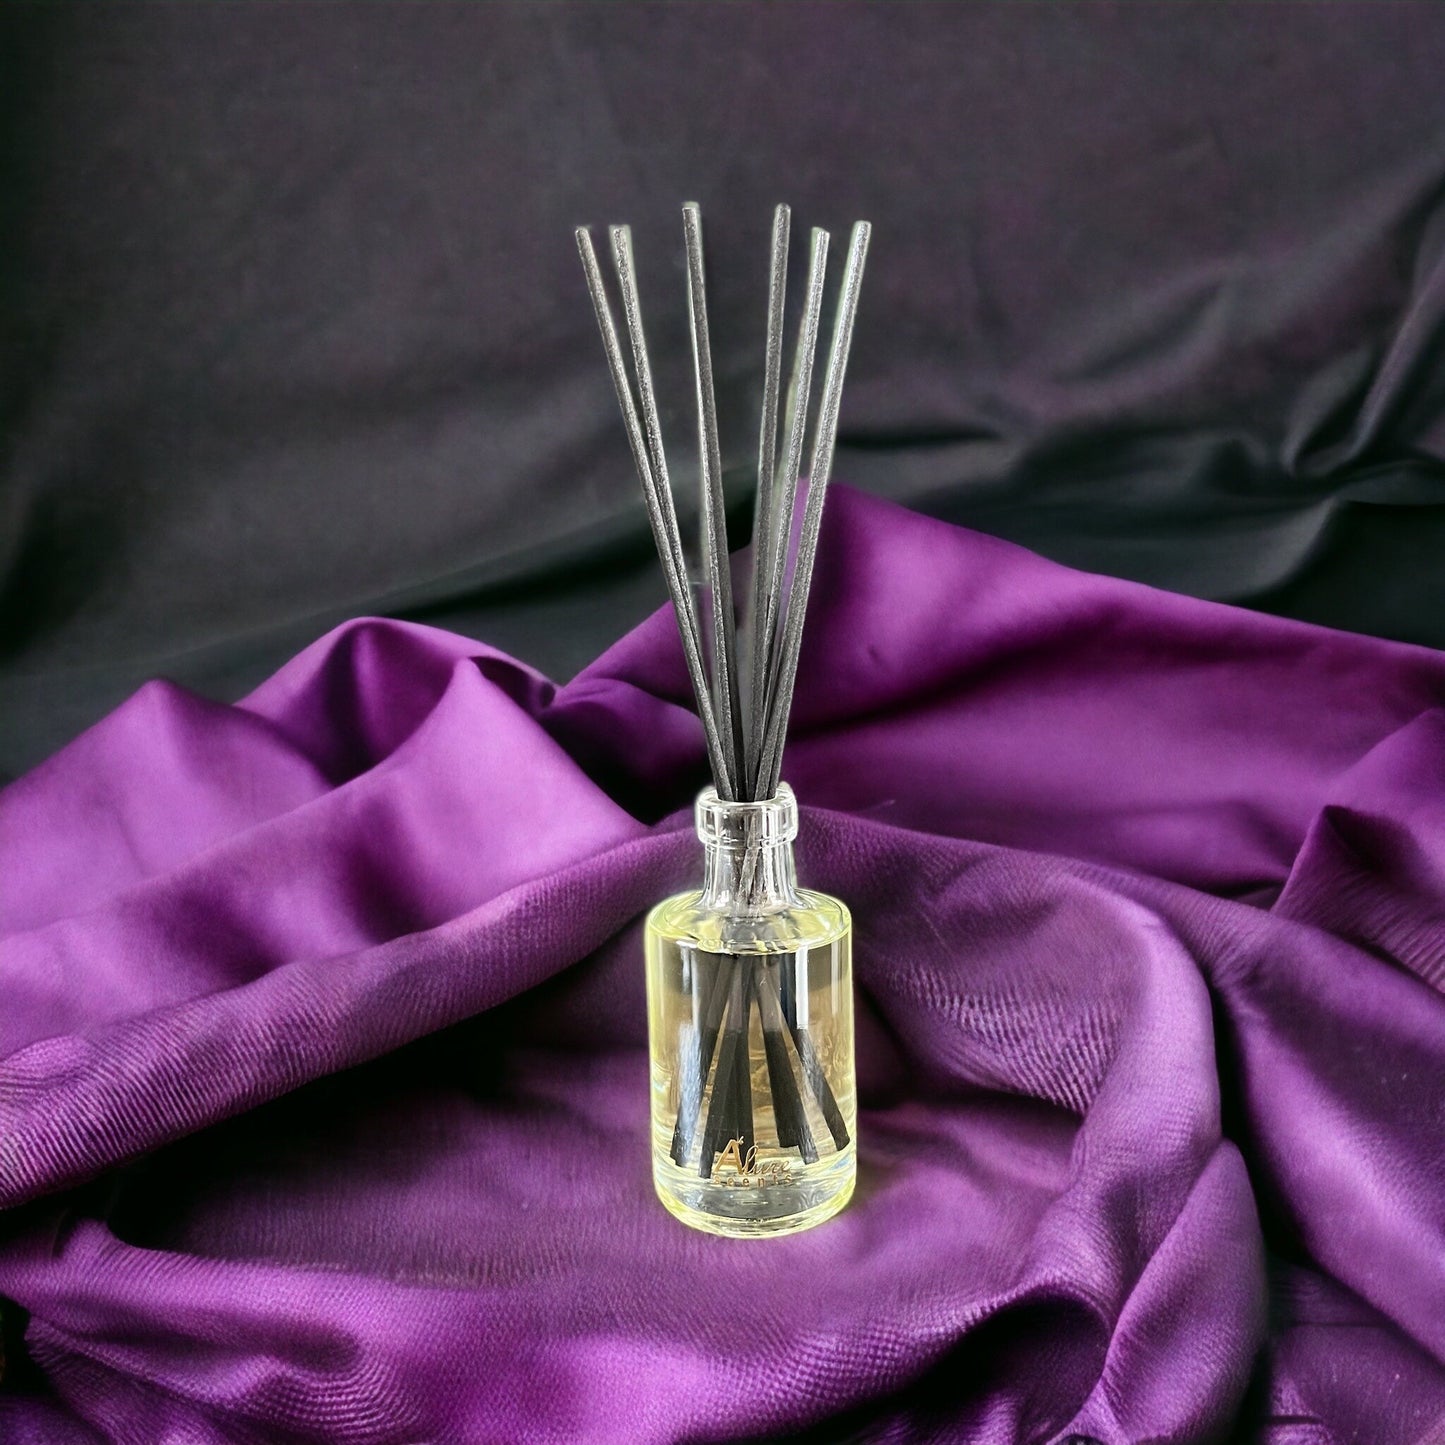 Arabian Silk fragrance sticks